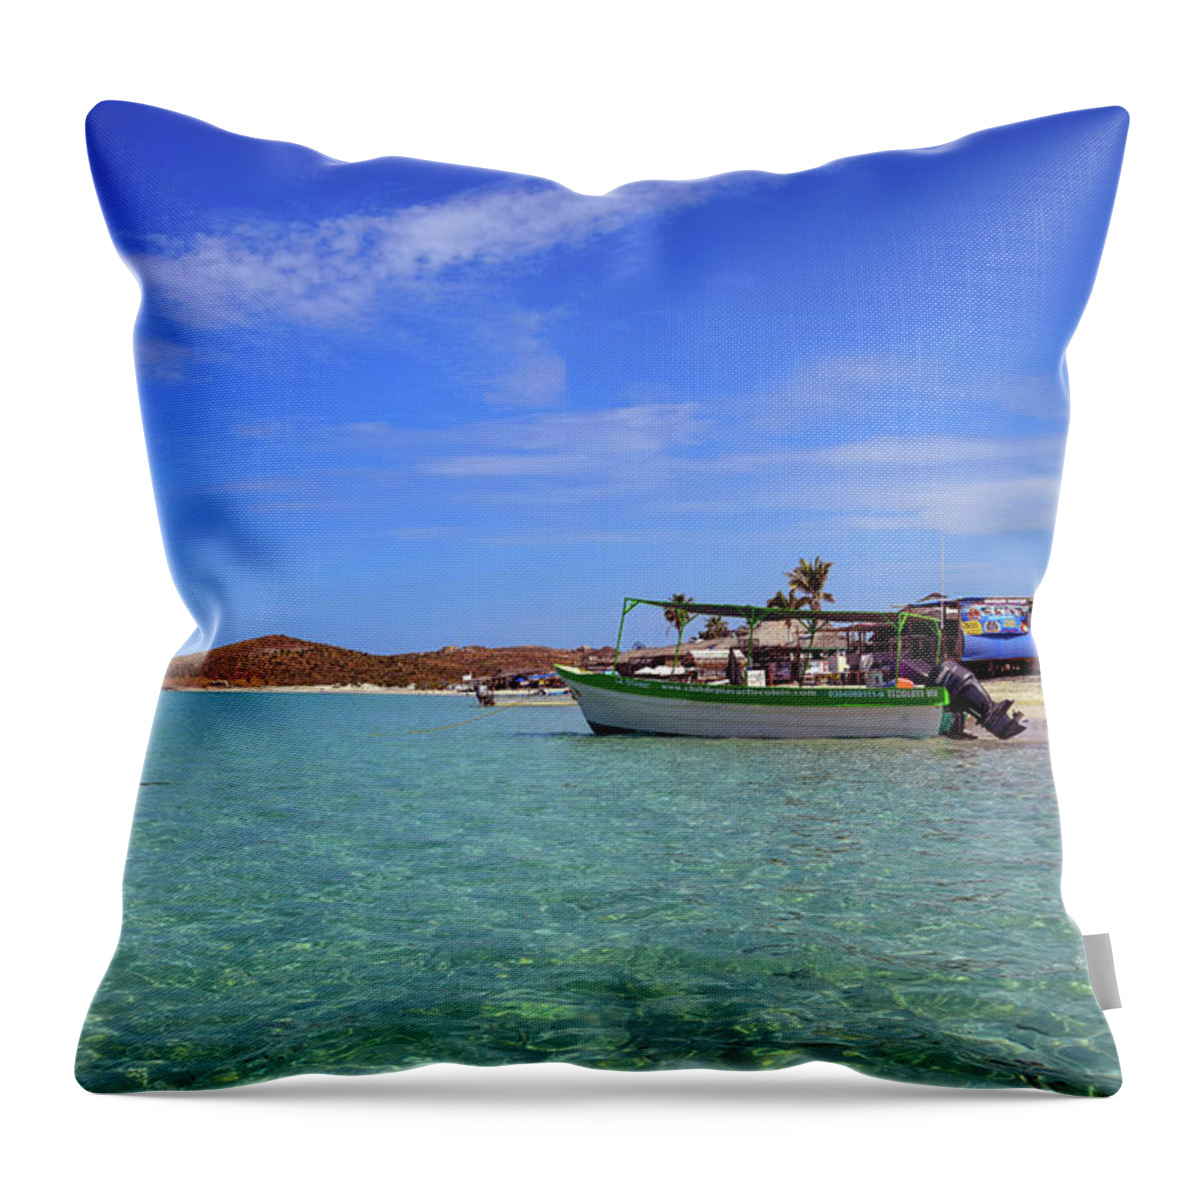 Playa Tecolote Throw Pillow featuring the photograph Playa Tecolote by William Scott Koenig